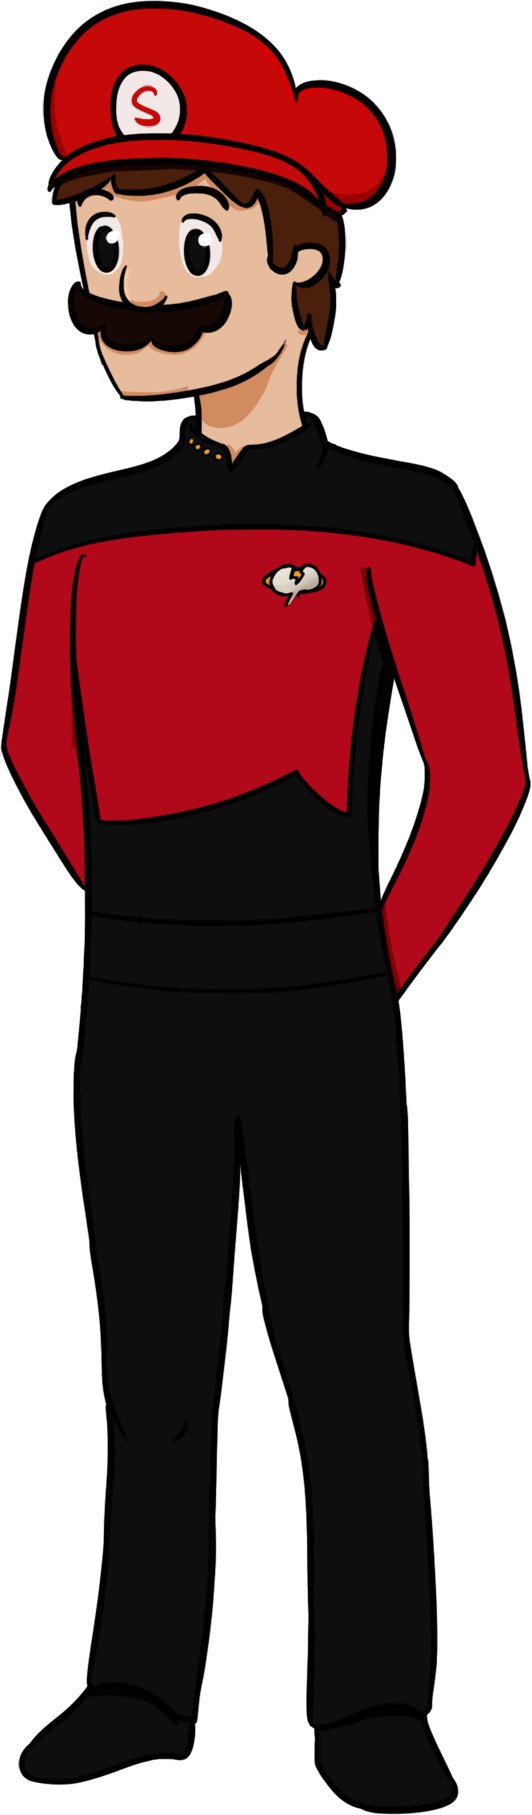 Captain SethBling of the USS Enterprise-D